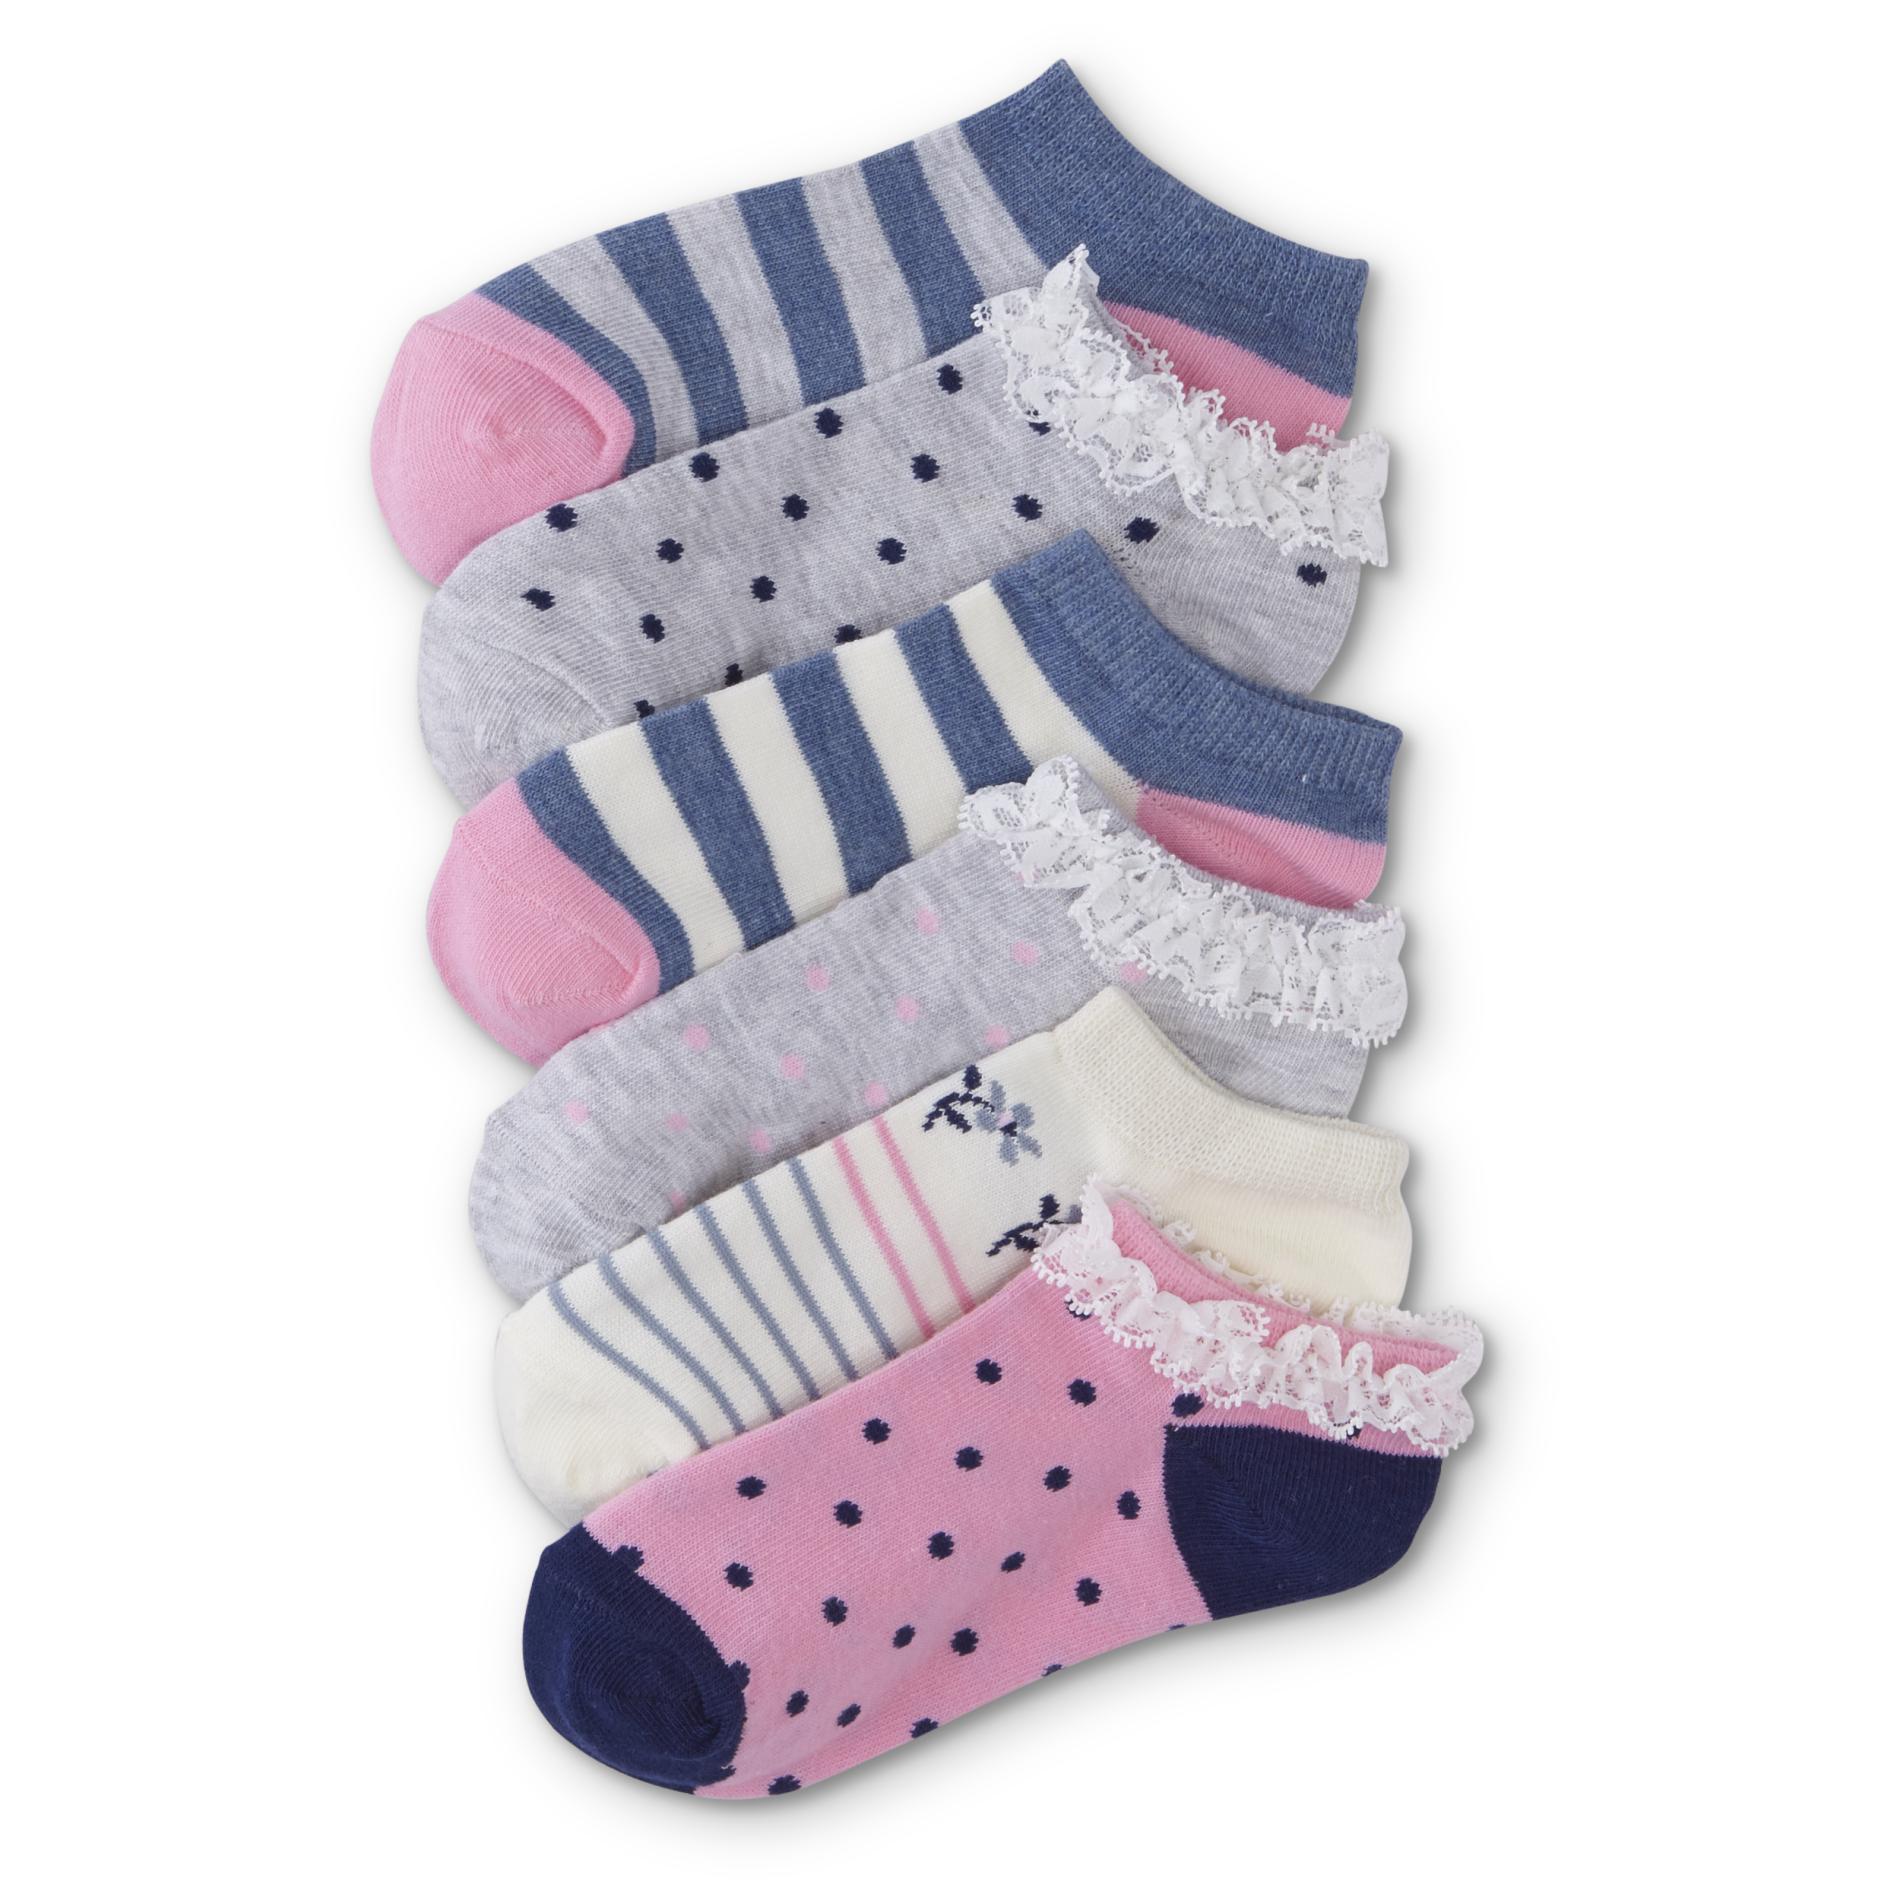 Joe Boxer Girls' 6-Pairs Low-Cut Socks - Striped & Polka Dot